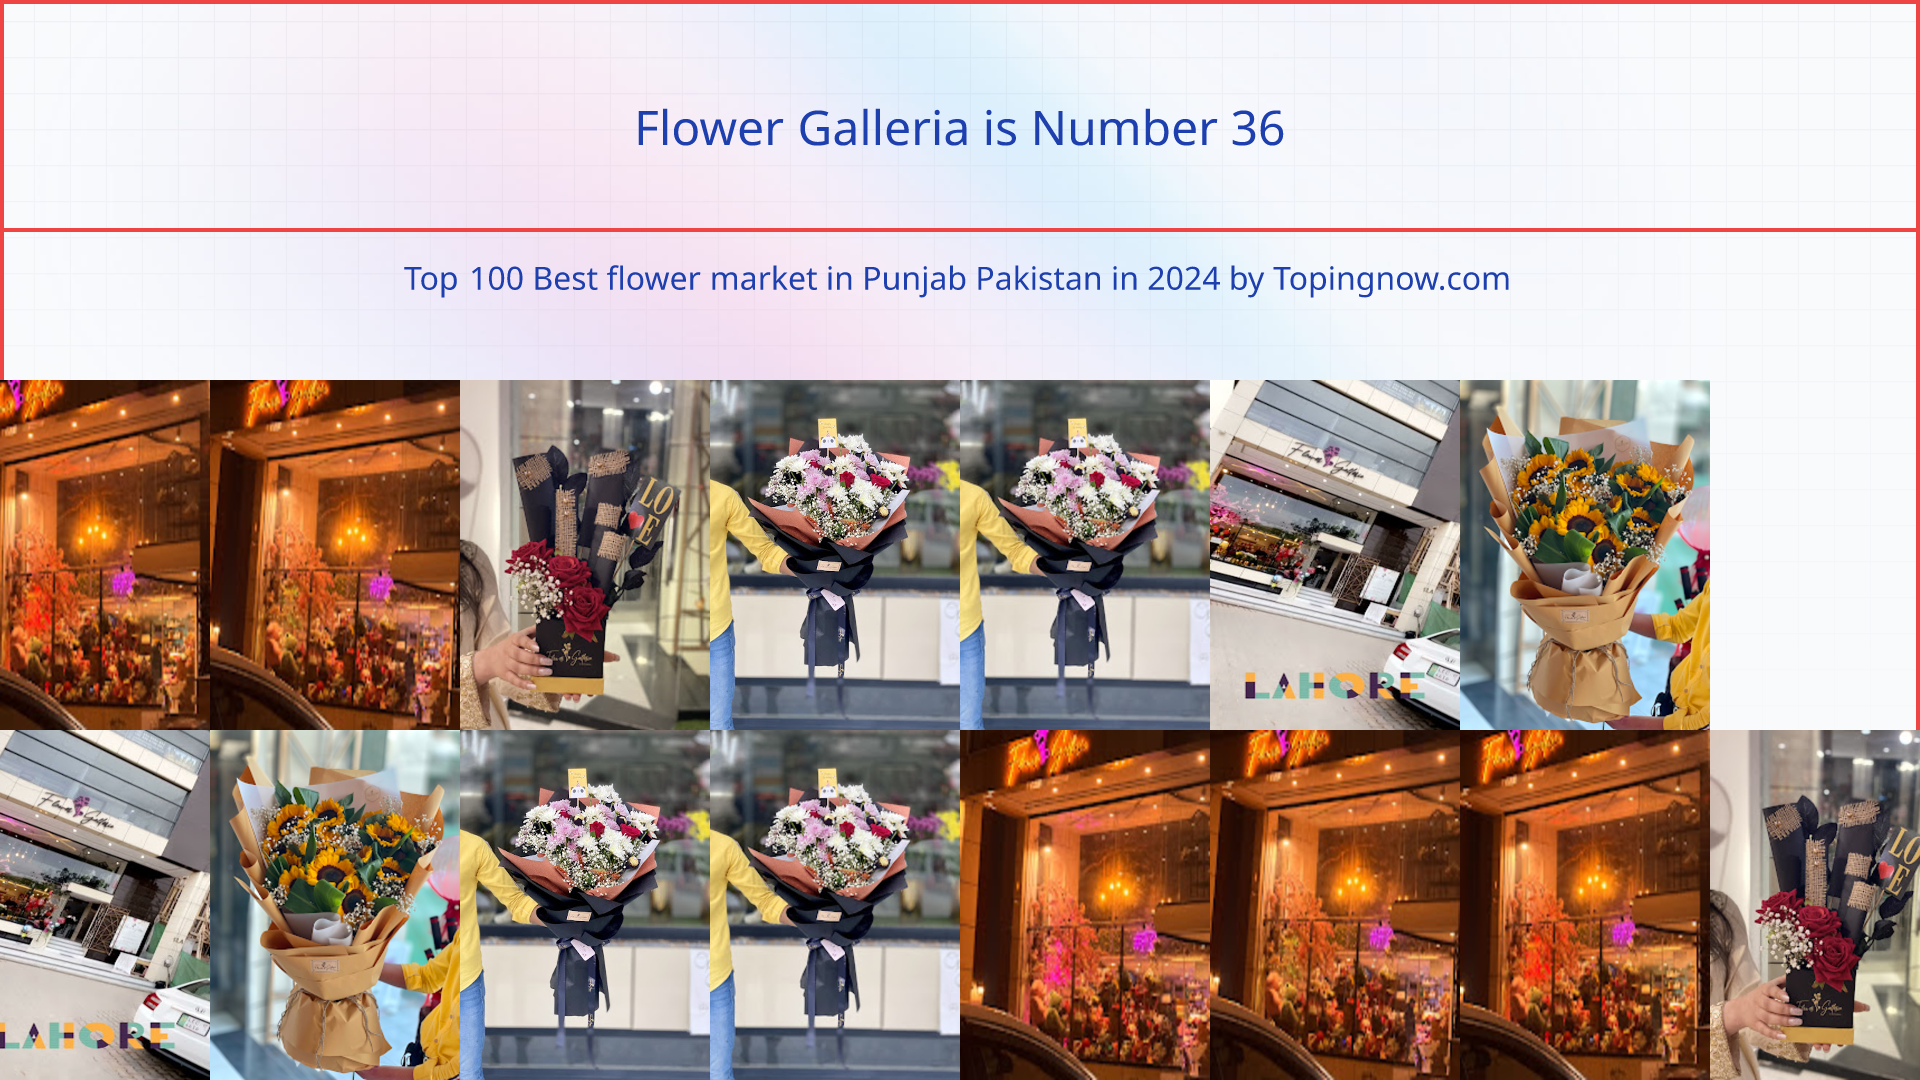 Flower Galleria: Top 100 Best flower market in Punjab Pakistan in 2024